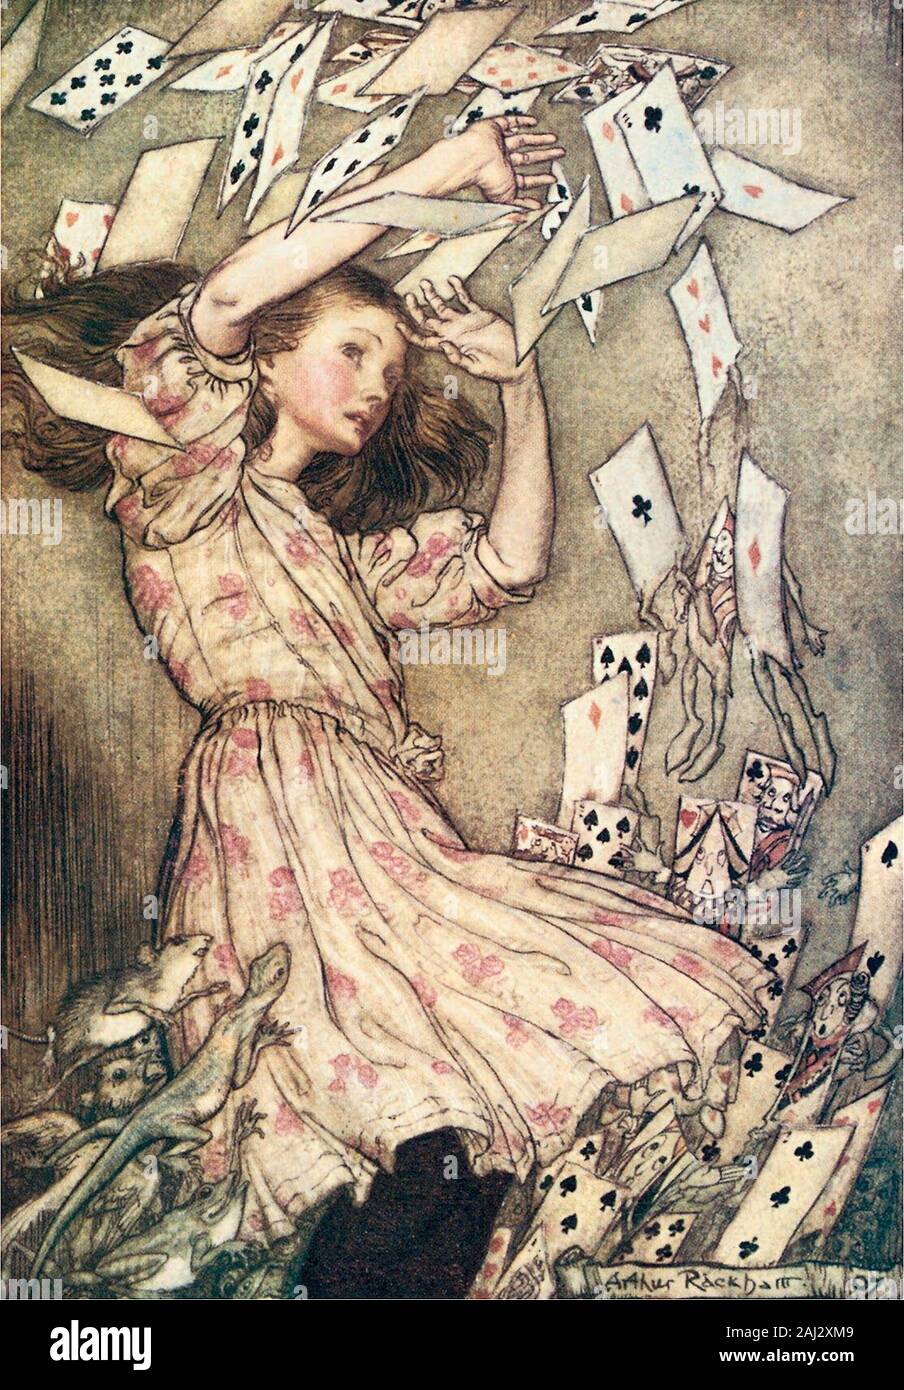 Alice in wonderland illustration art Stock Photo